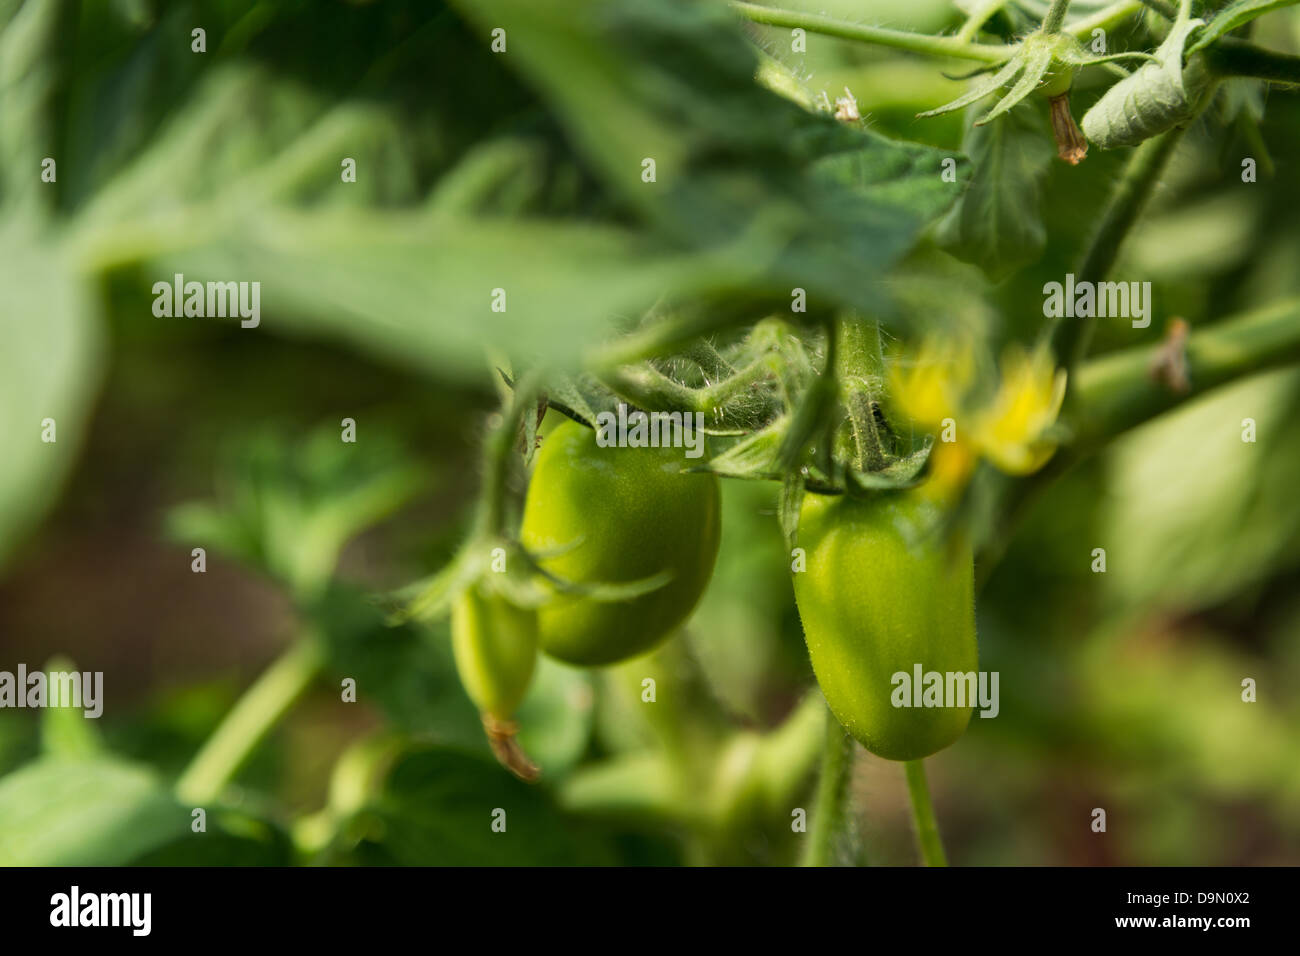 unripe green tomato on shrub in hothouse Stock Photo